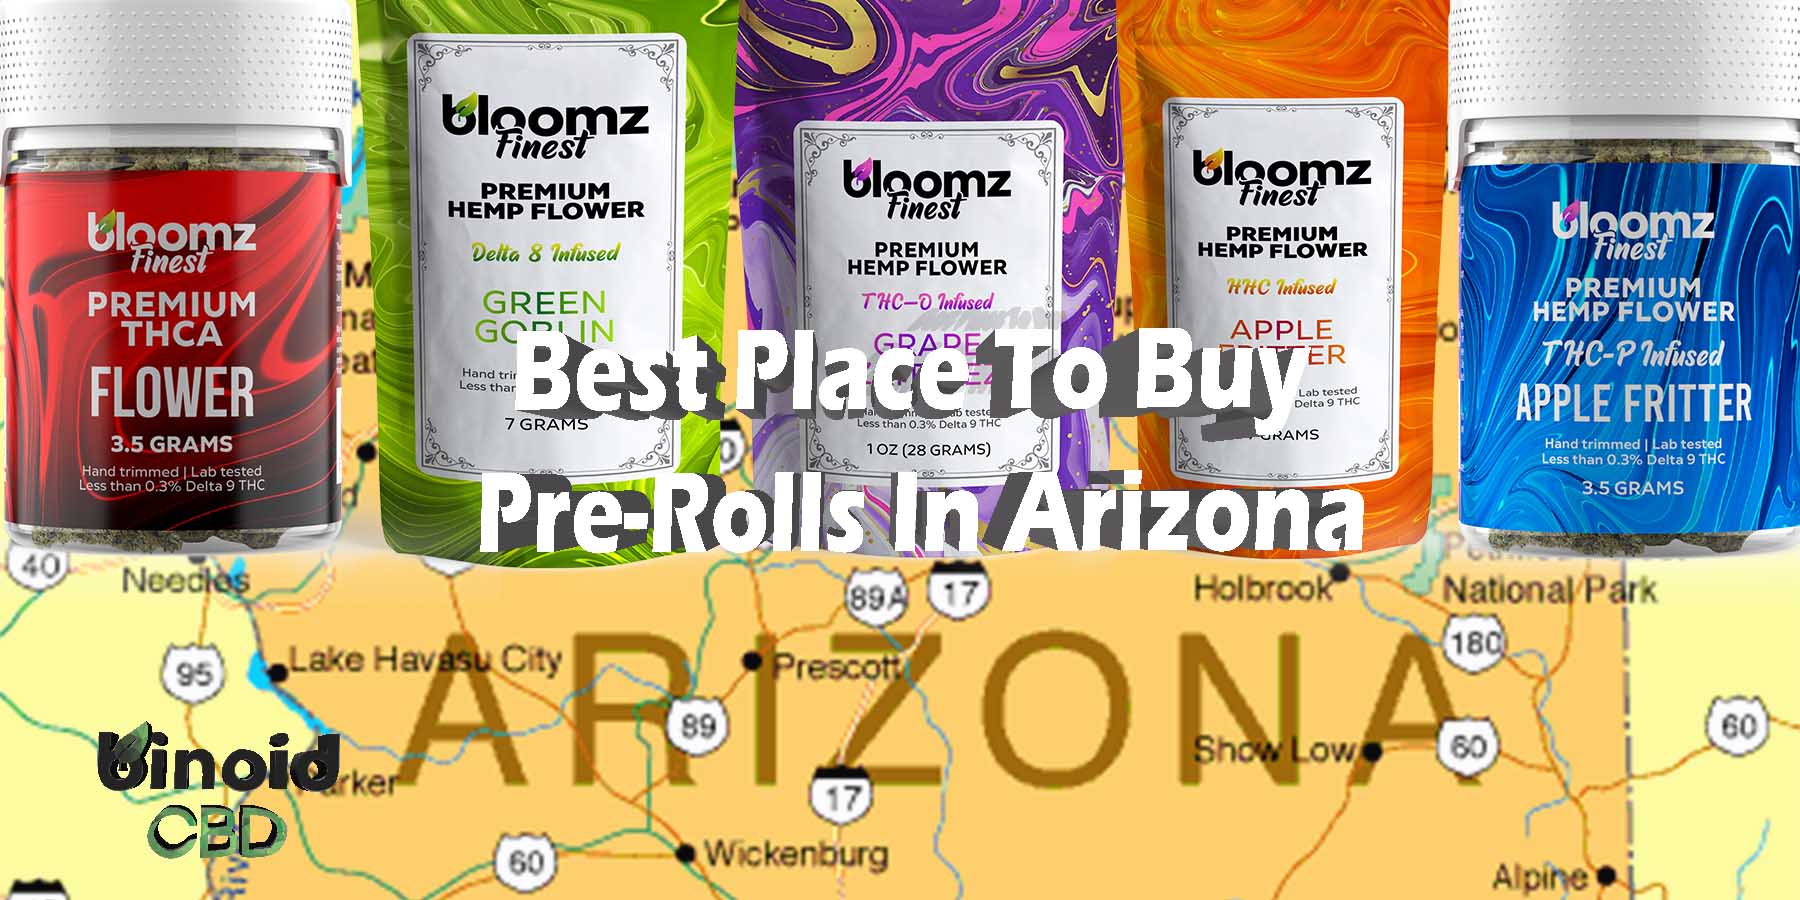 Best Place To Buy Pre-Rolls In Arizona Legal Quality Hemp For Sale Near Me Shop PreRolls Legal For Sale Near Me Shop Best Brand How To Purchase Online Binoid